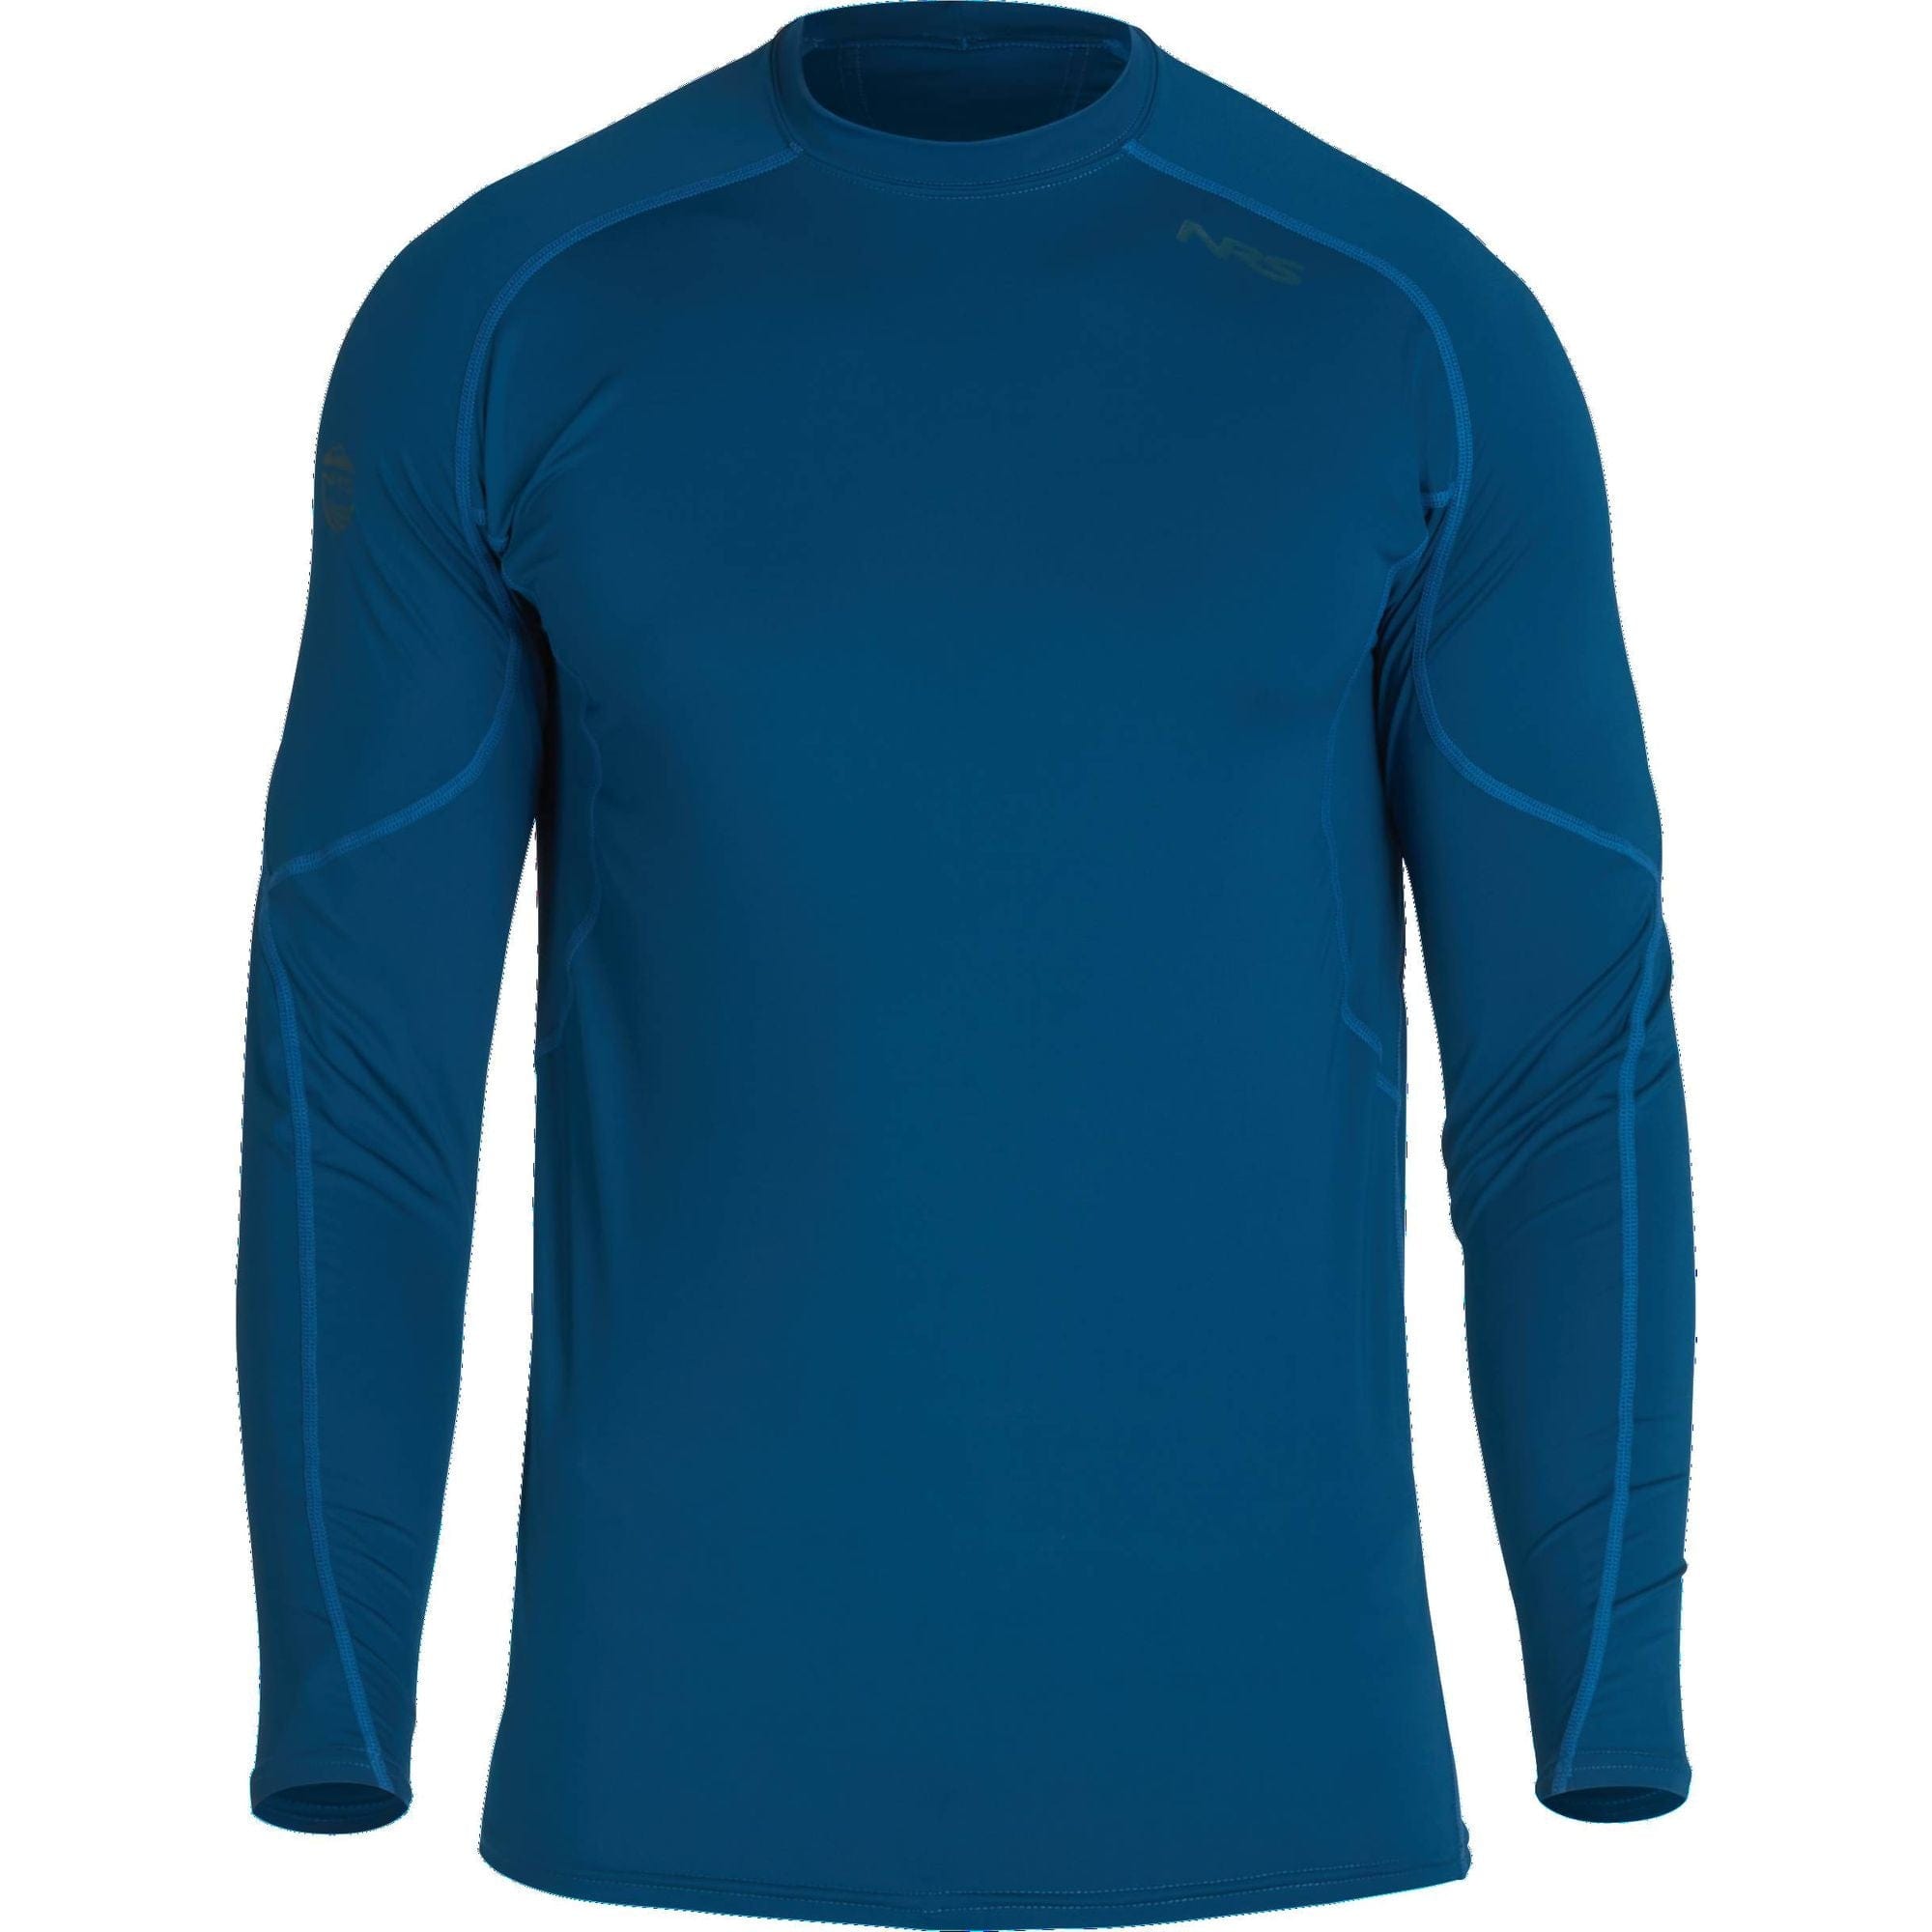 NRS Men's Long-Sleeve Guide Shirt - Closeout